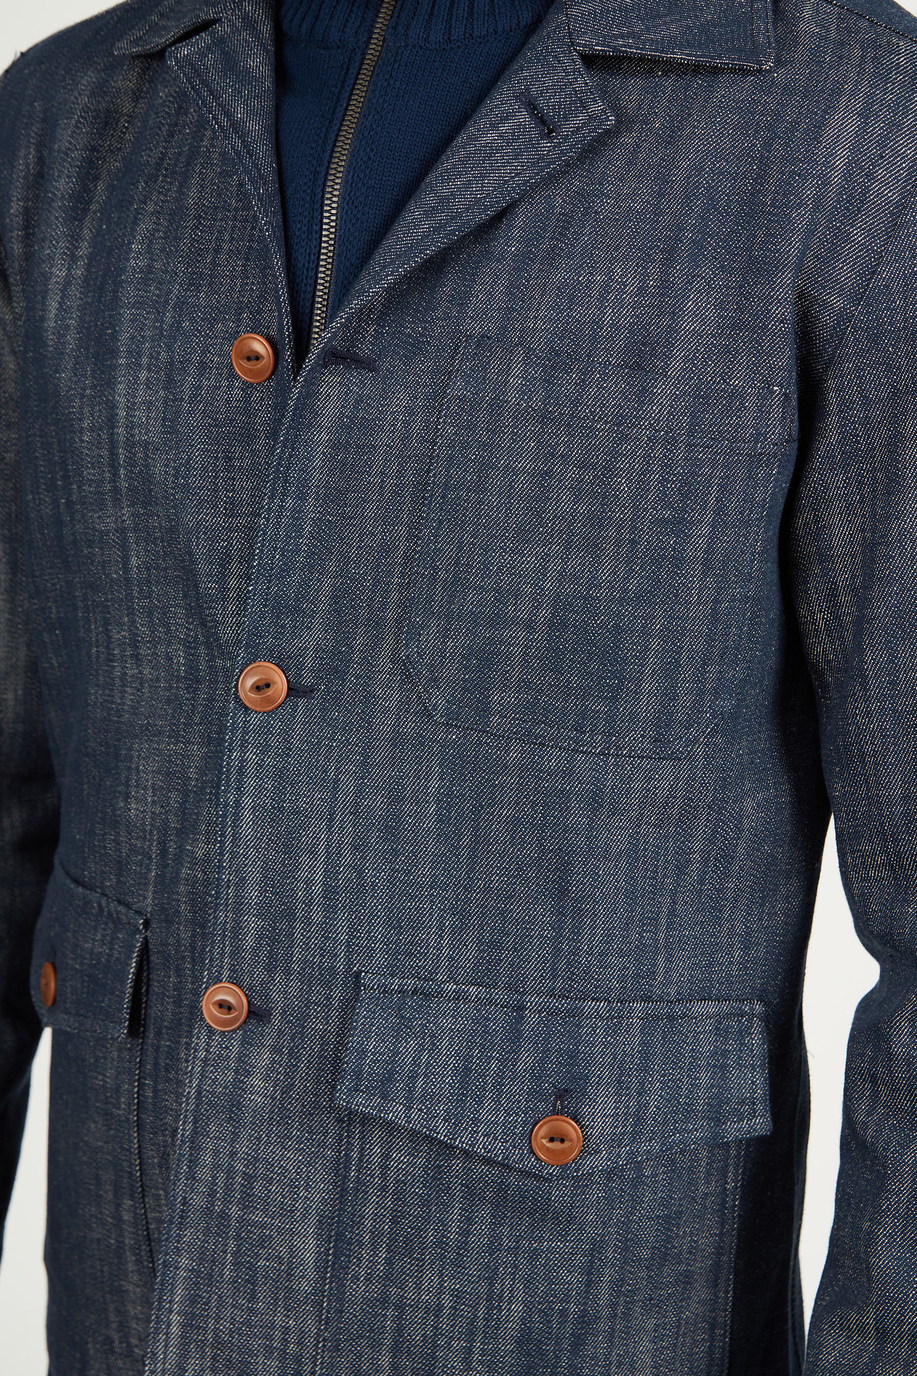 Men's Sahariana jacket in 100% cotton, regular fit model - Jackets | La Martina - Official Online Shop